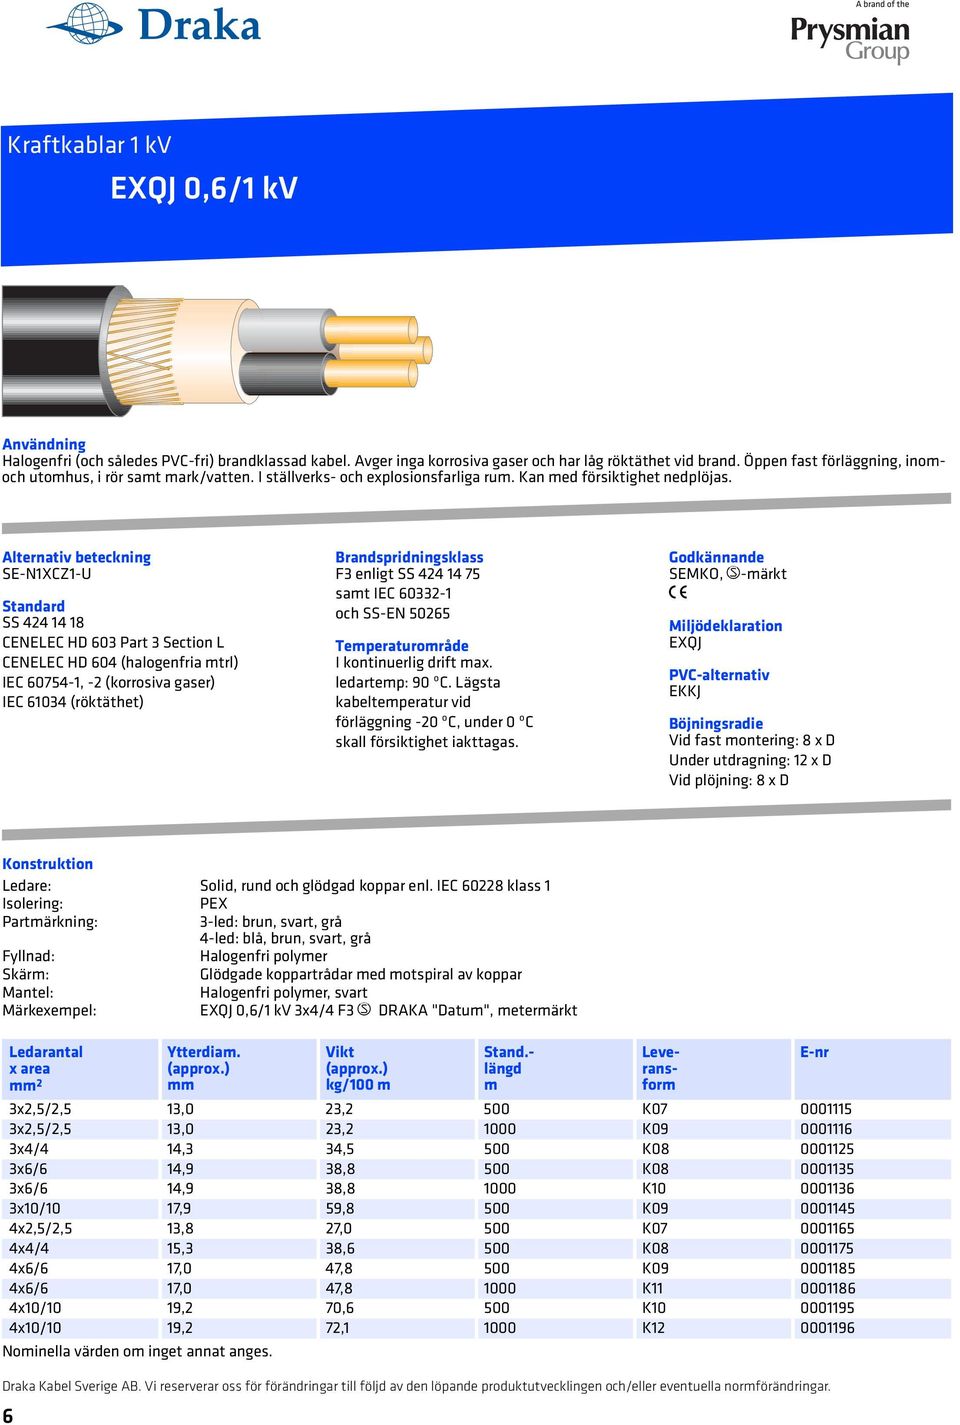 Alternativ beteckning SE-N1XCZ1-U SS 424 14 18 CENELEC HD 603 Part 3 Section L CENELEC HD 604 (halogenfria trl) IEC 60754-1, -2 (korrosiva gaser) IEC 61034 (röktäthet) F3 enligt SS 424 14 75 sat IEC